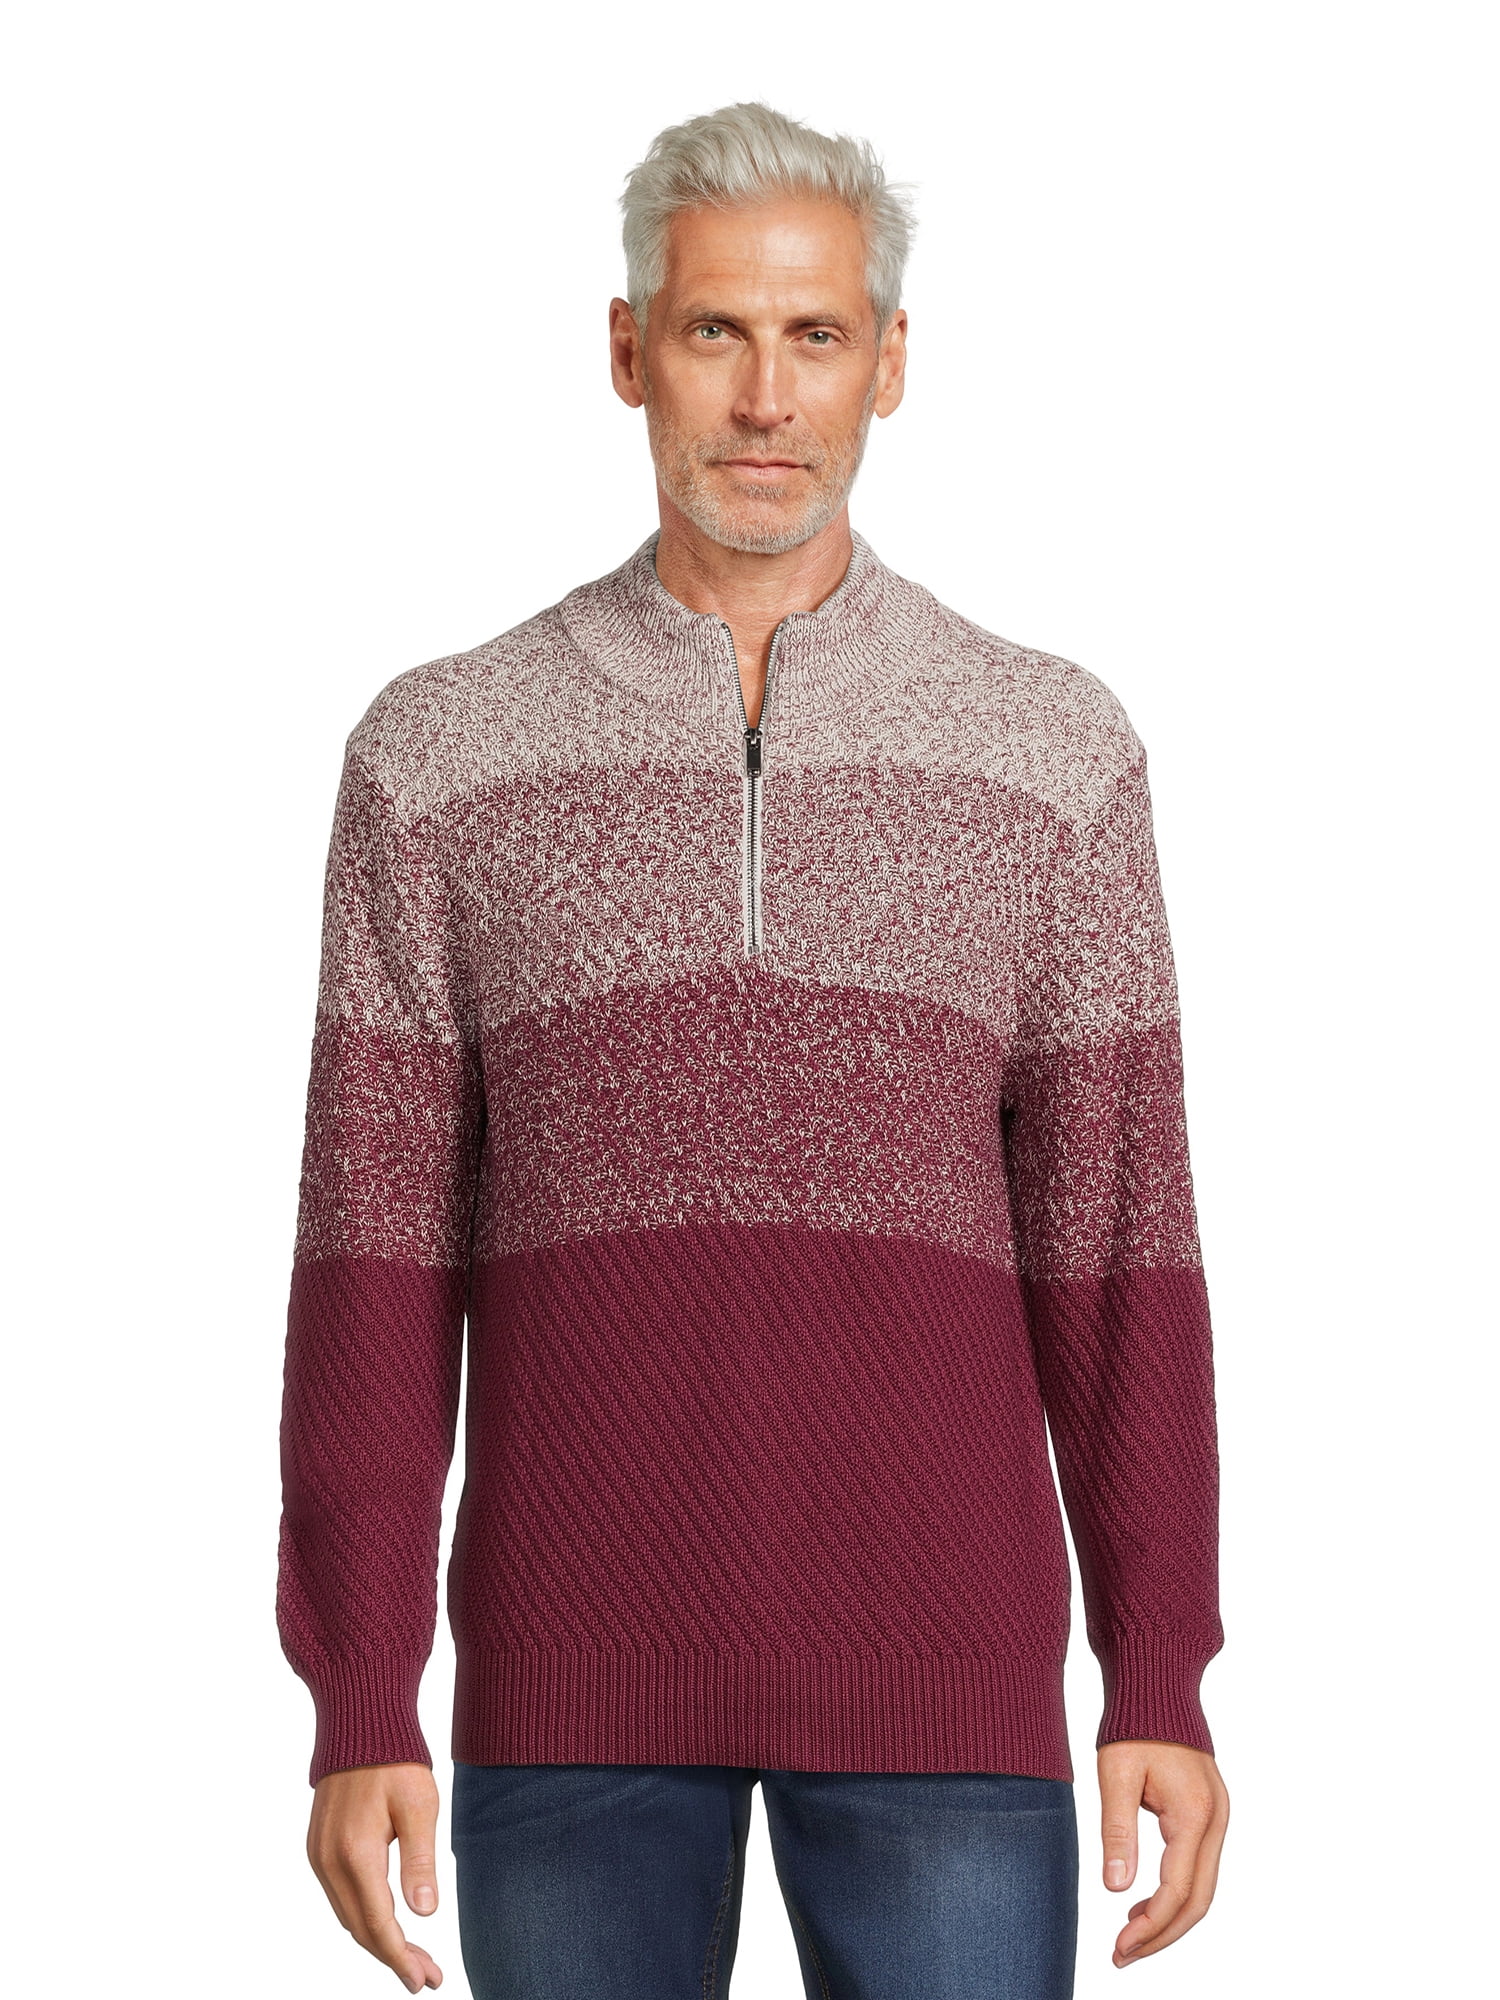 Tribekka 44 Men\'s Gradient Mock Neck Quarter Zip Sweater with Long Sleeves,  Sizes S-2XL